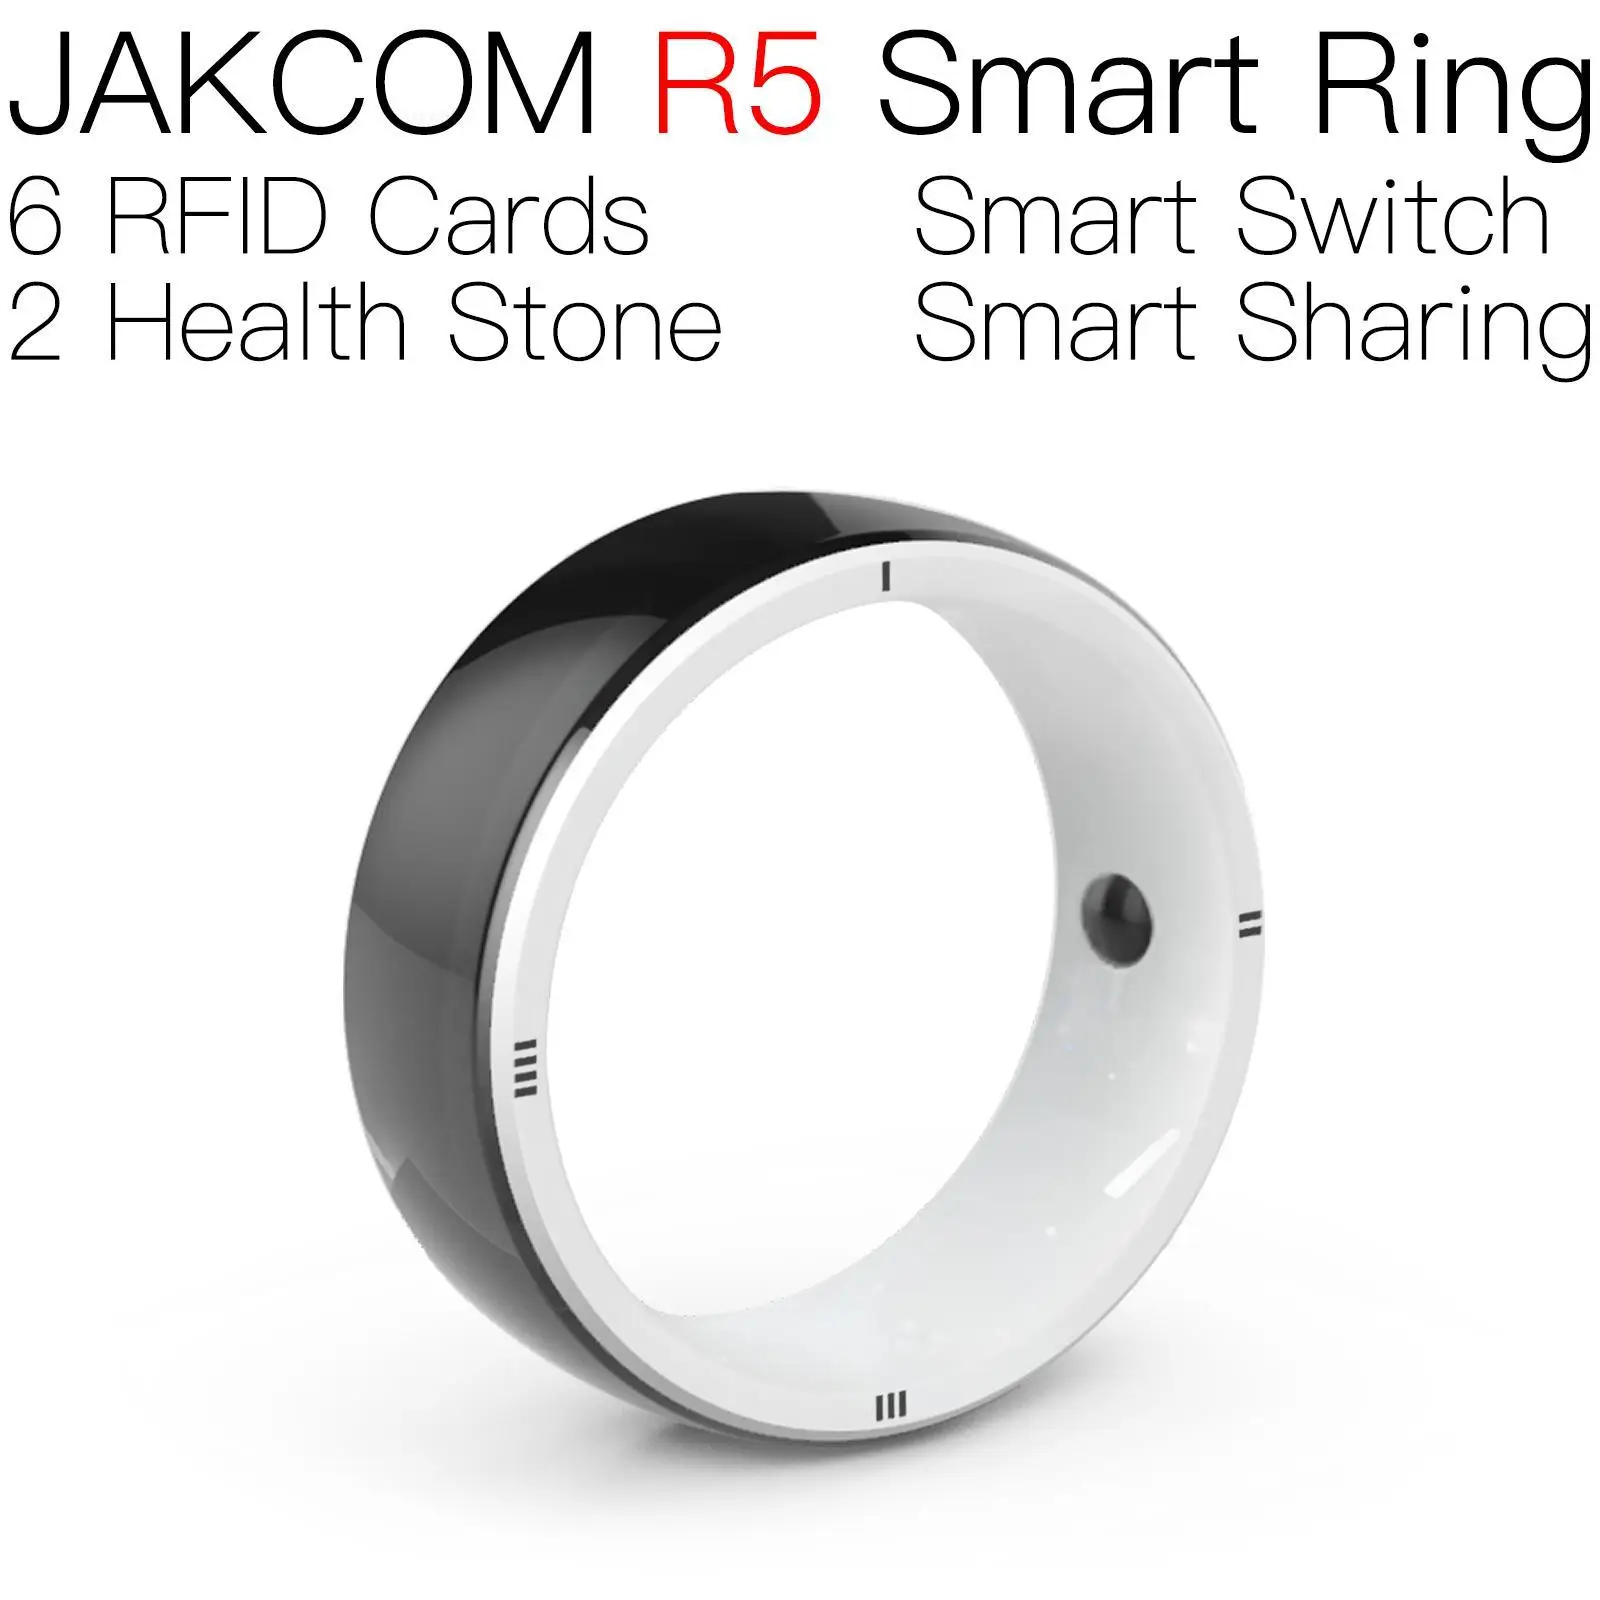 

JAKCOM R5 Smart Ring better than em4305 t5577 rewritable id keyfobs tags nfc sticker writable chip memory card mini one cows